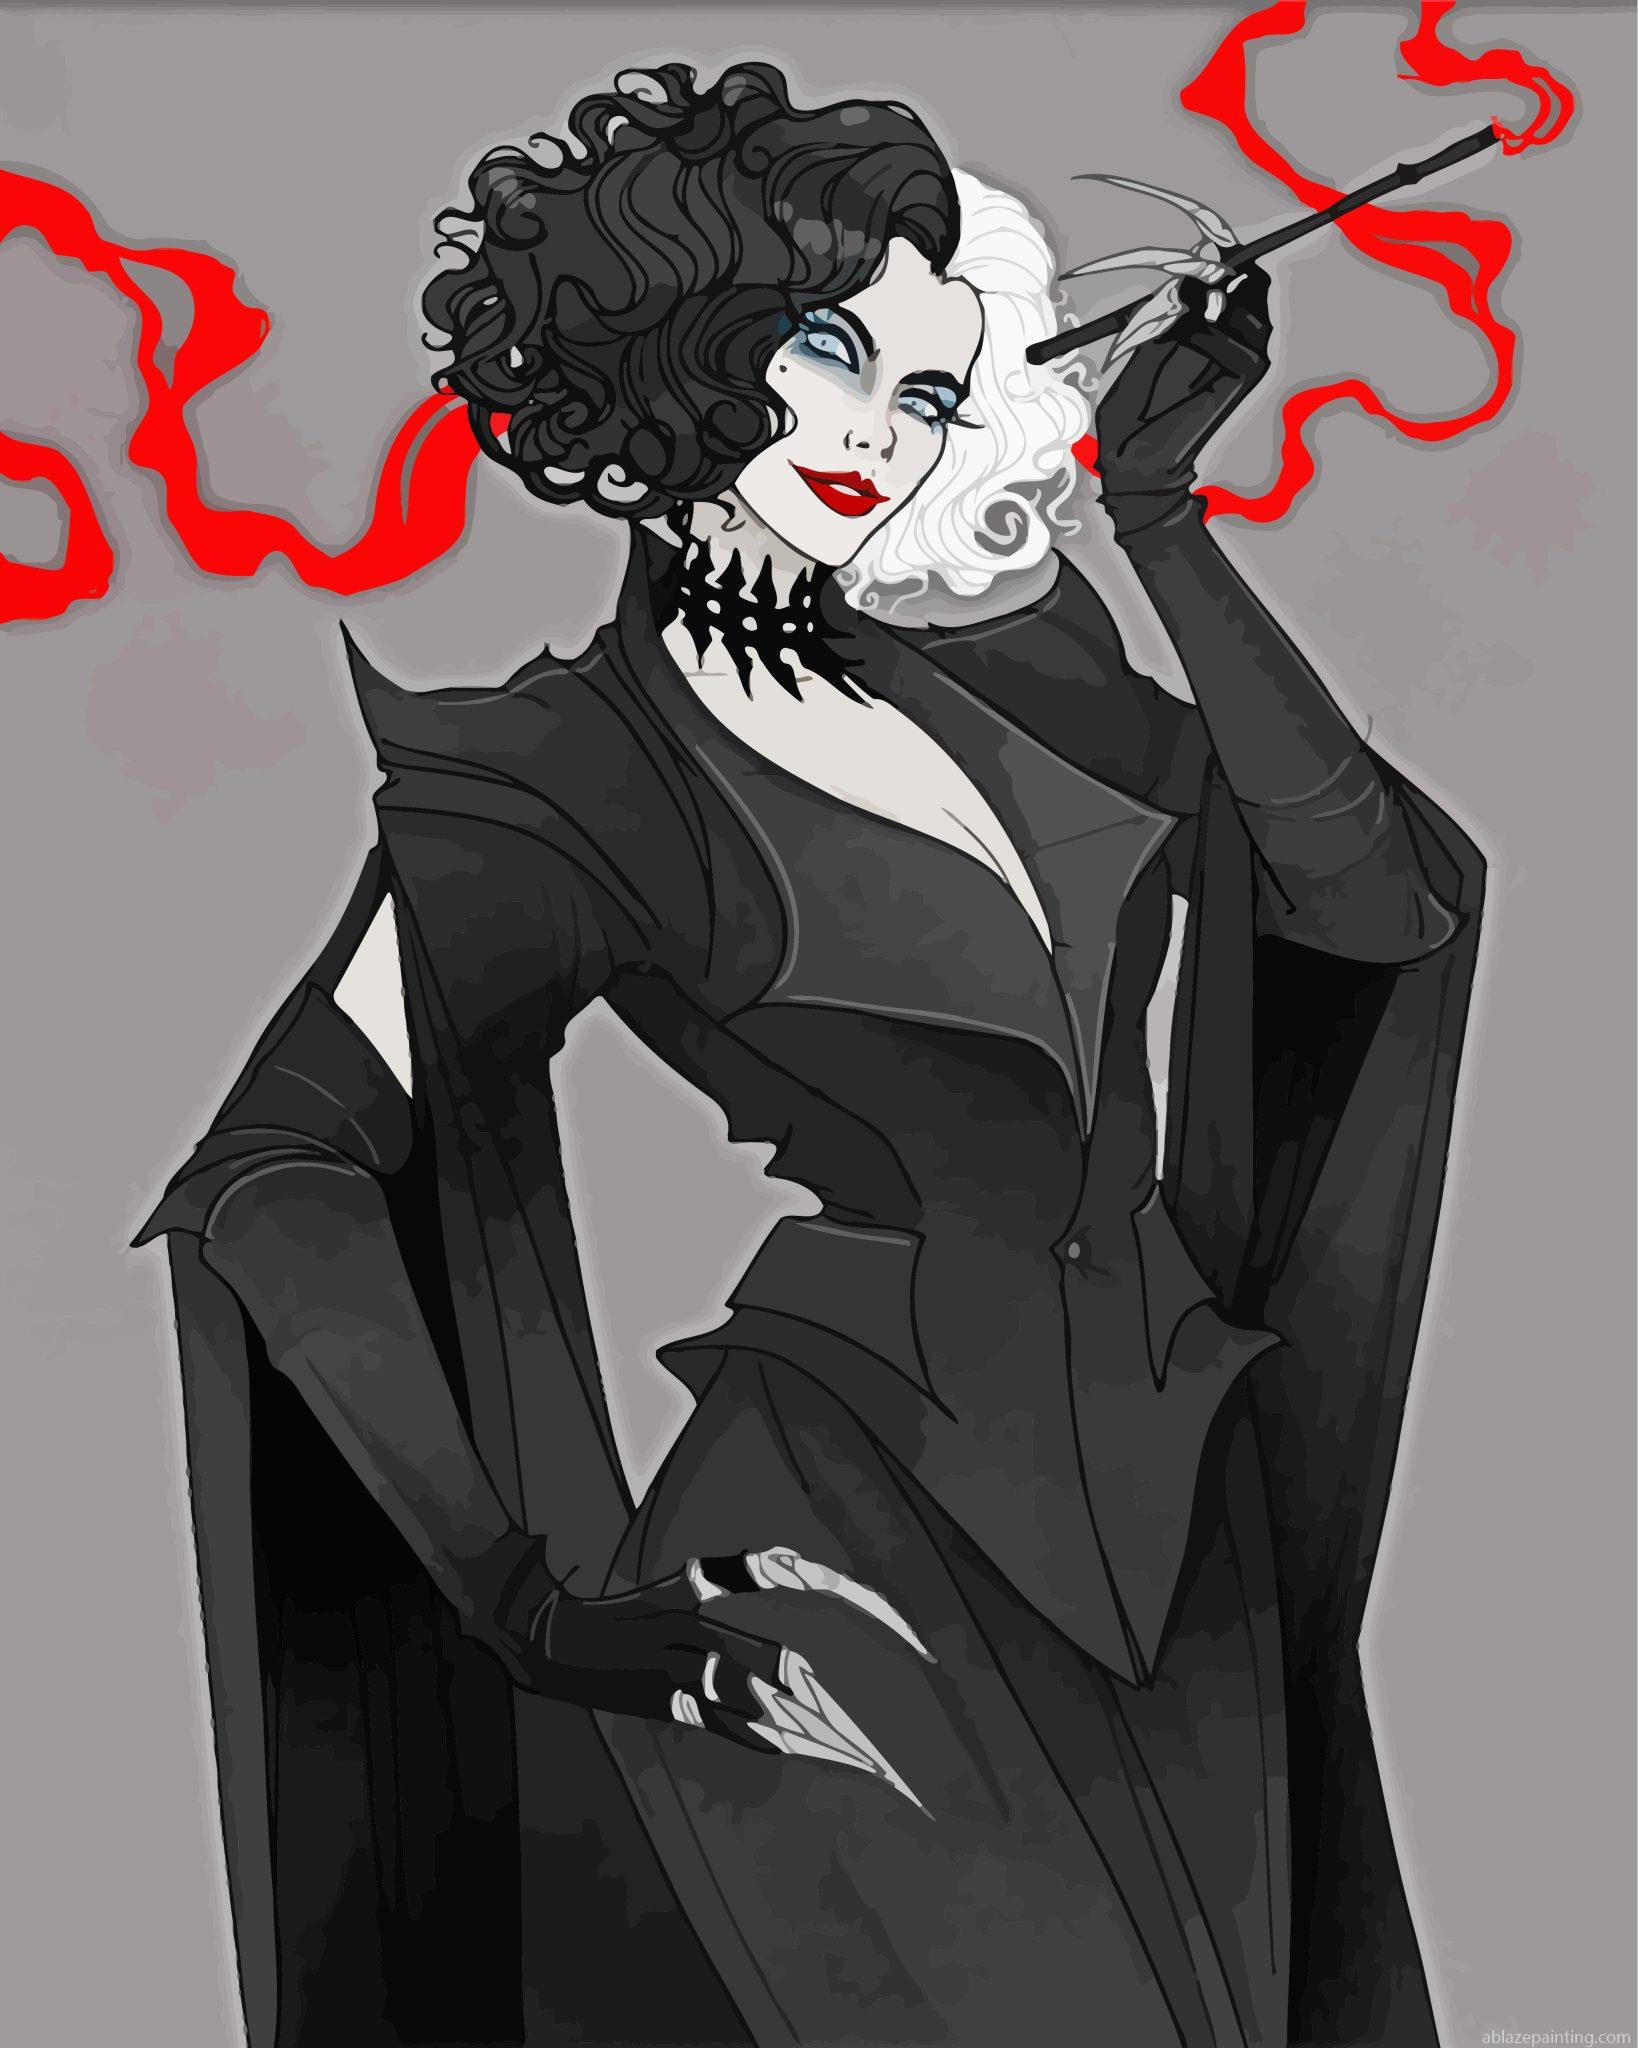 Cruella De Vil Character Paint By Numbers.jpg